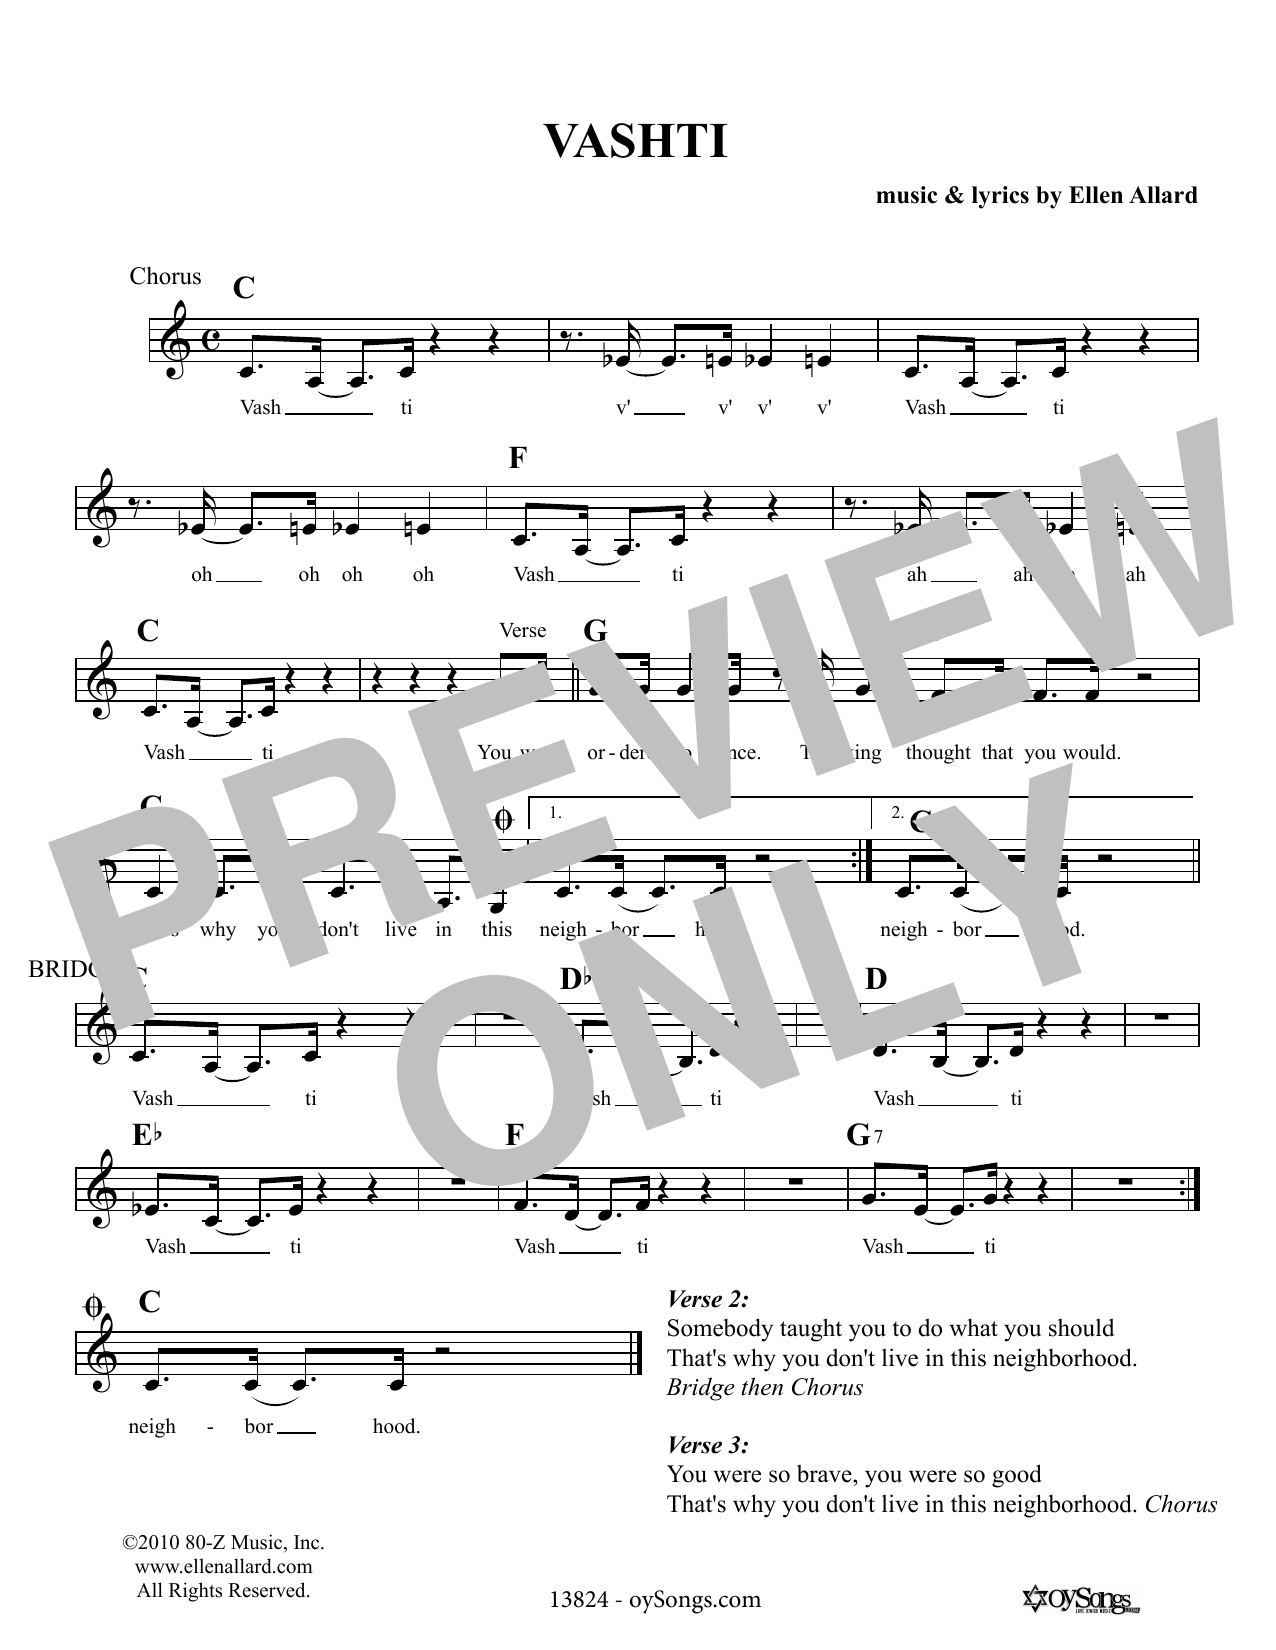 Download Ellen Allard Vashti Sheet Music and learn how to play Melody Line, Lyrics & Chords PDF digital score in minutes